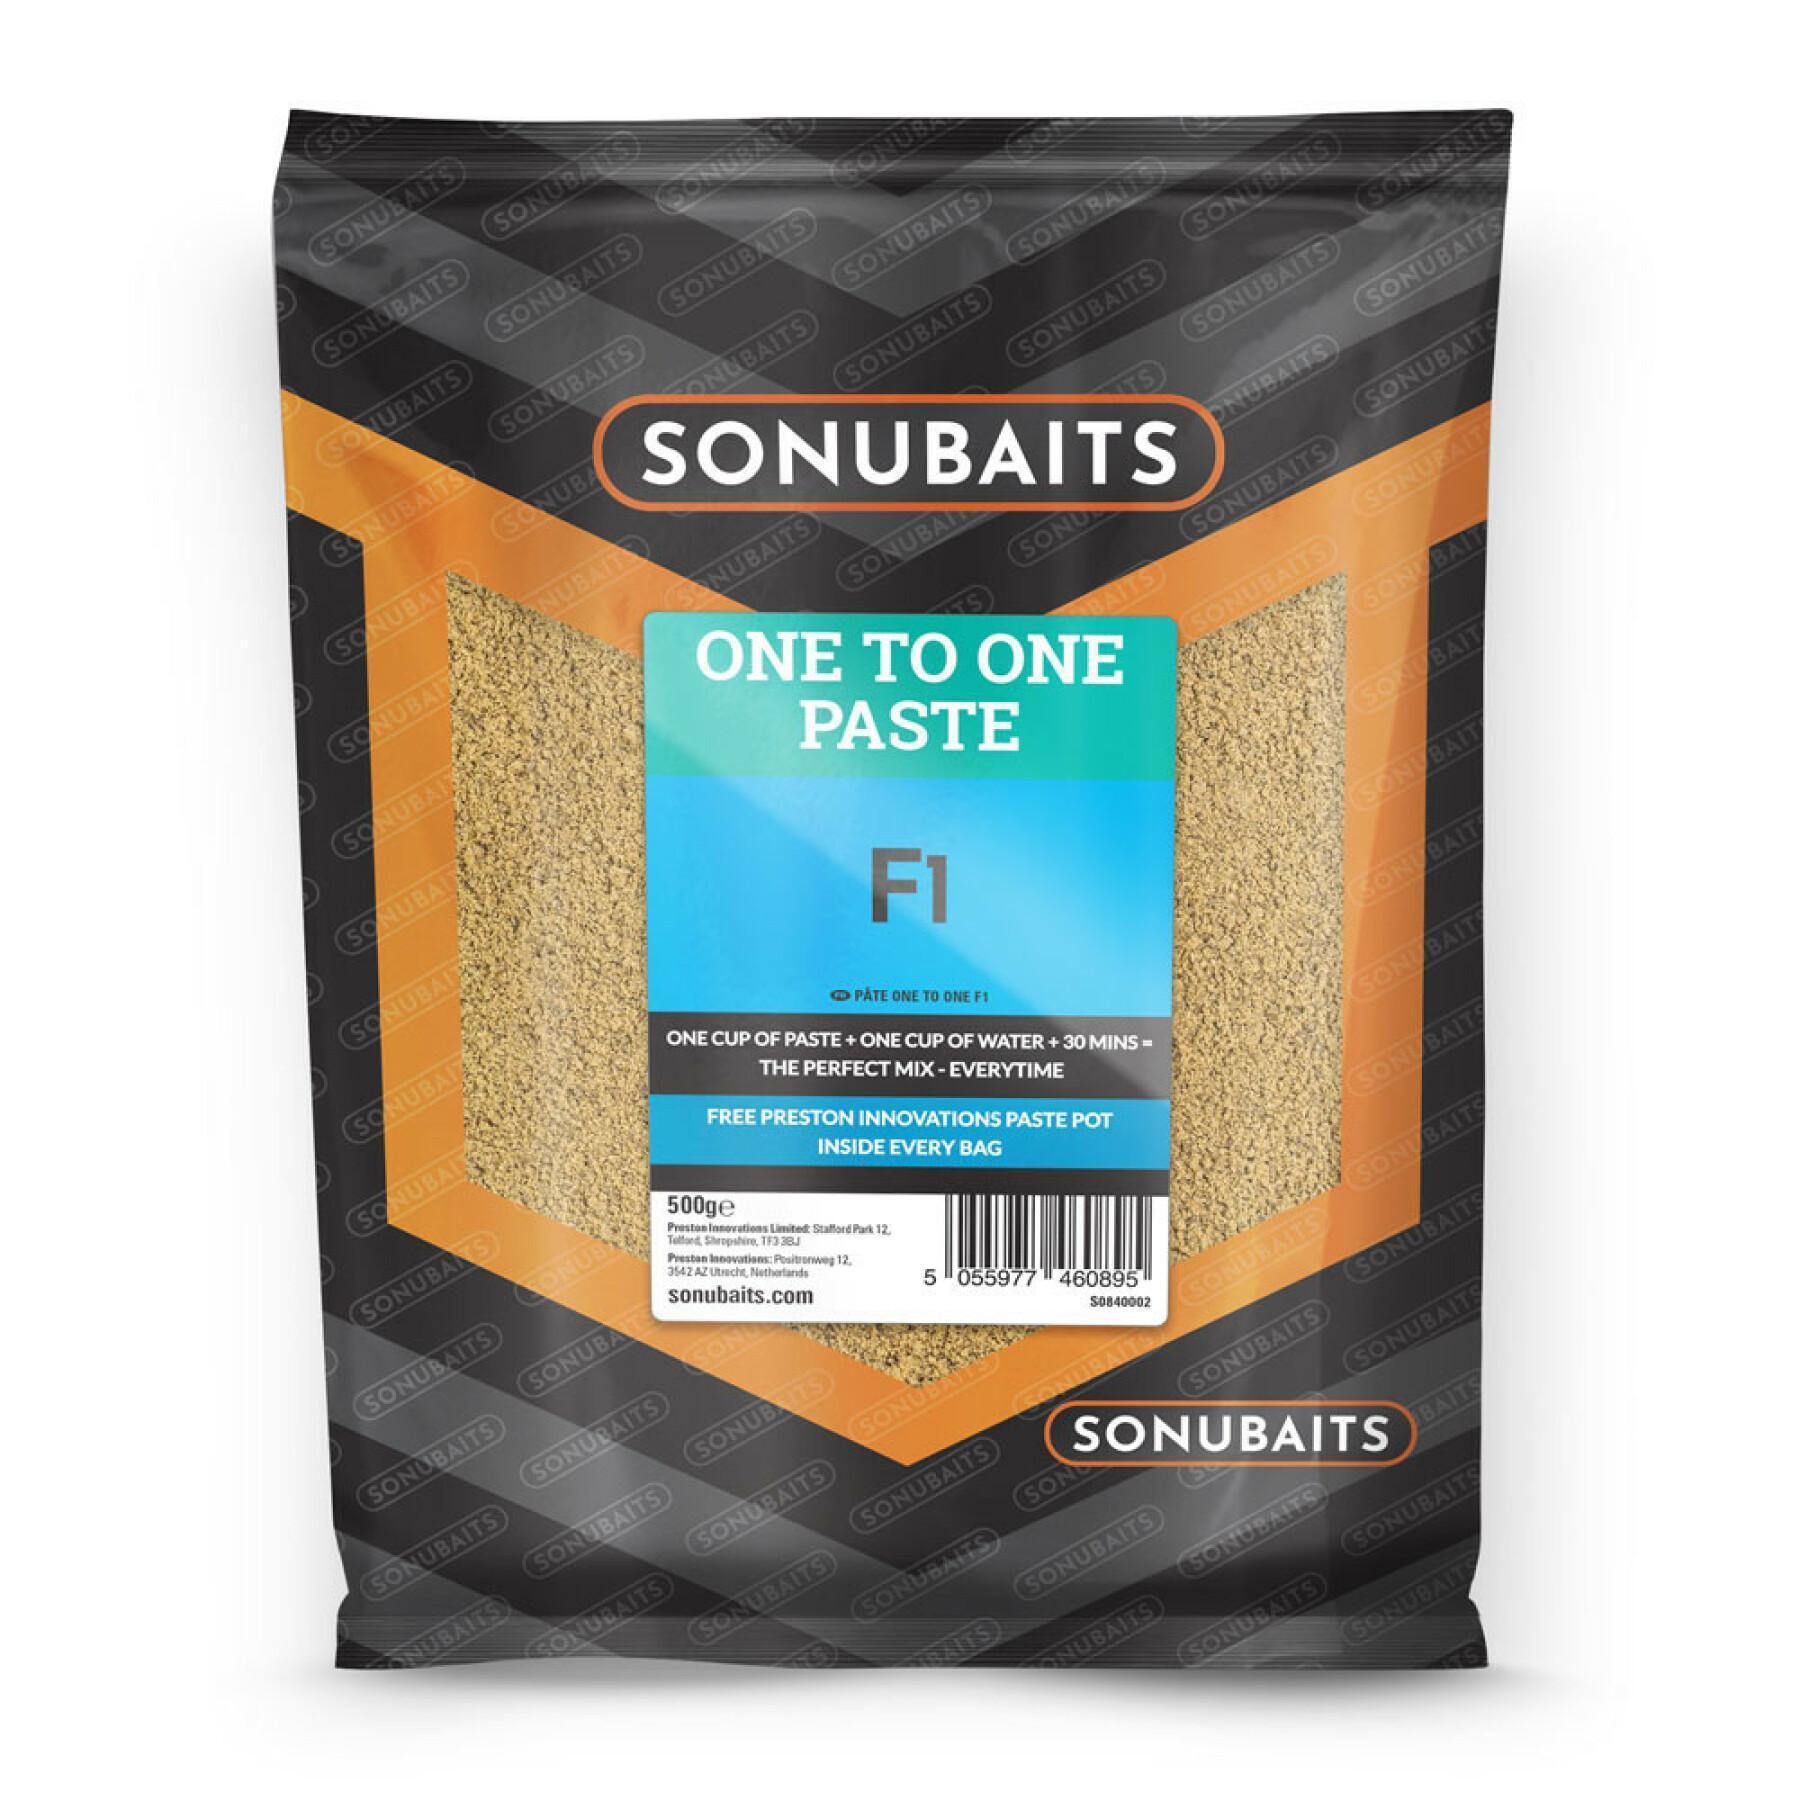 Colar Sonubaits one to one paste F1